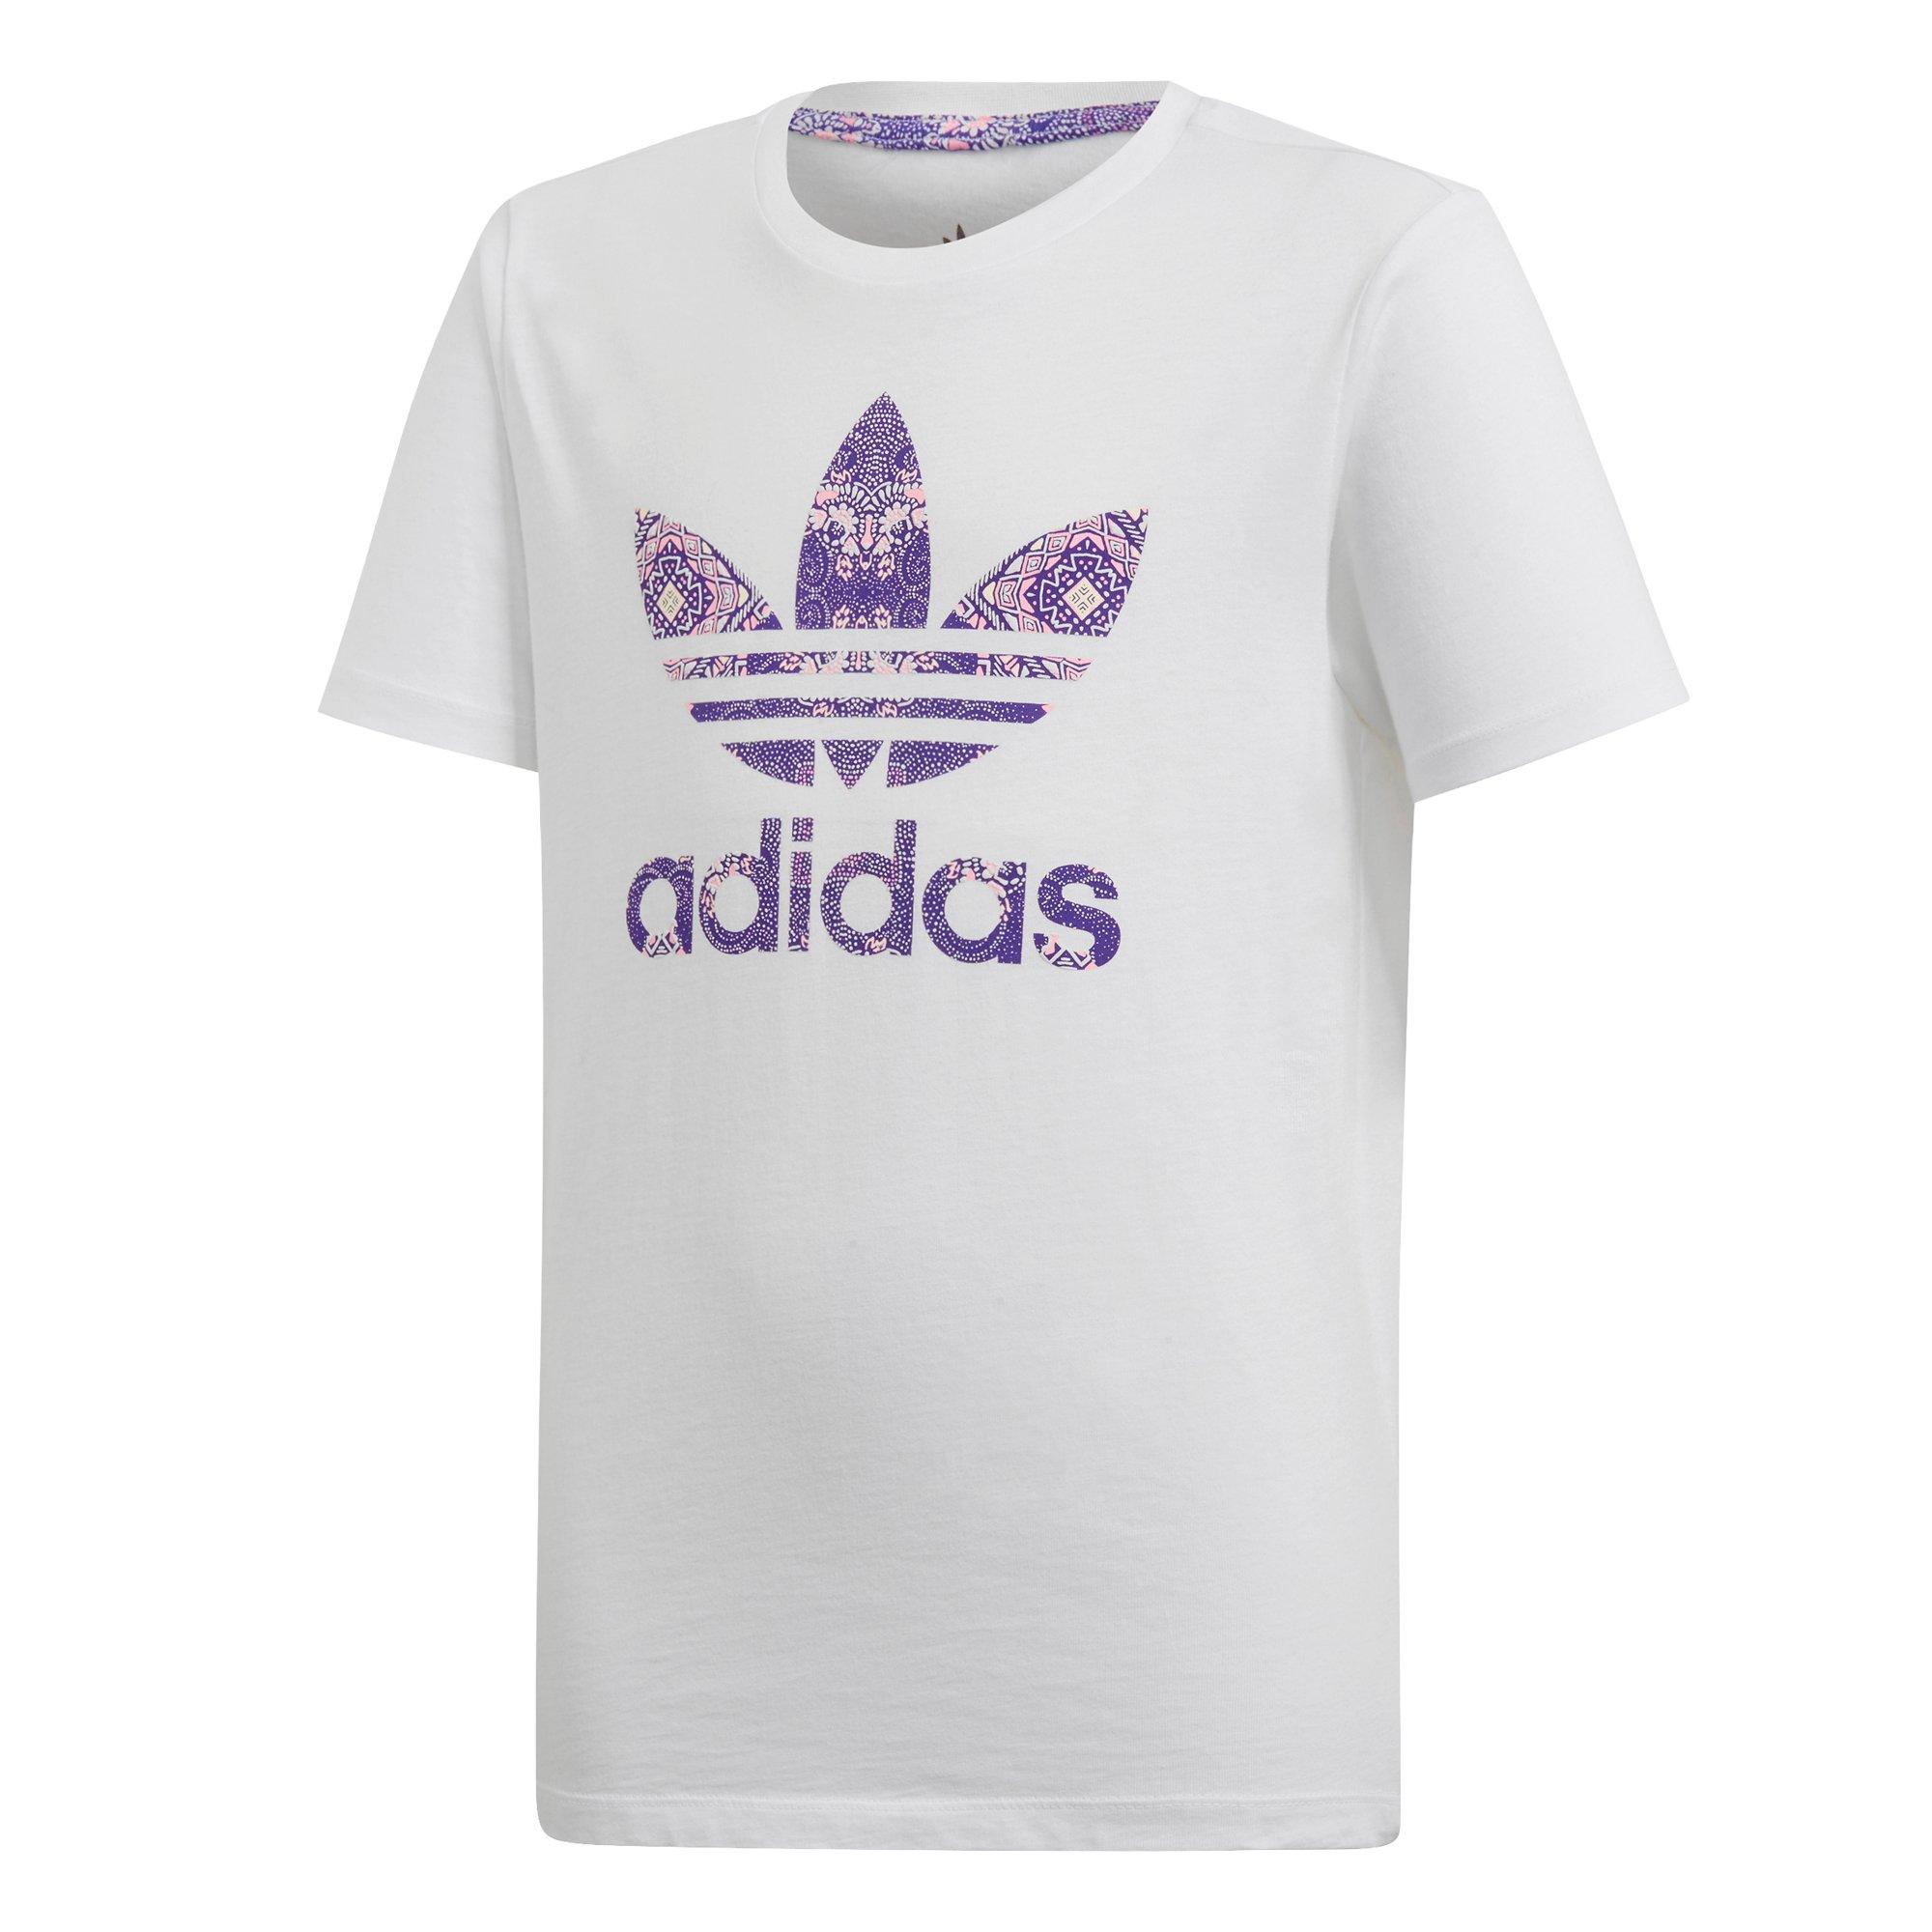 adidas Girls' Trefoil GFX White/Purple 